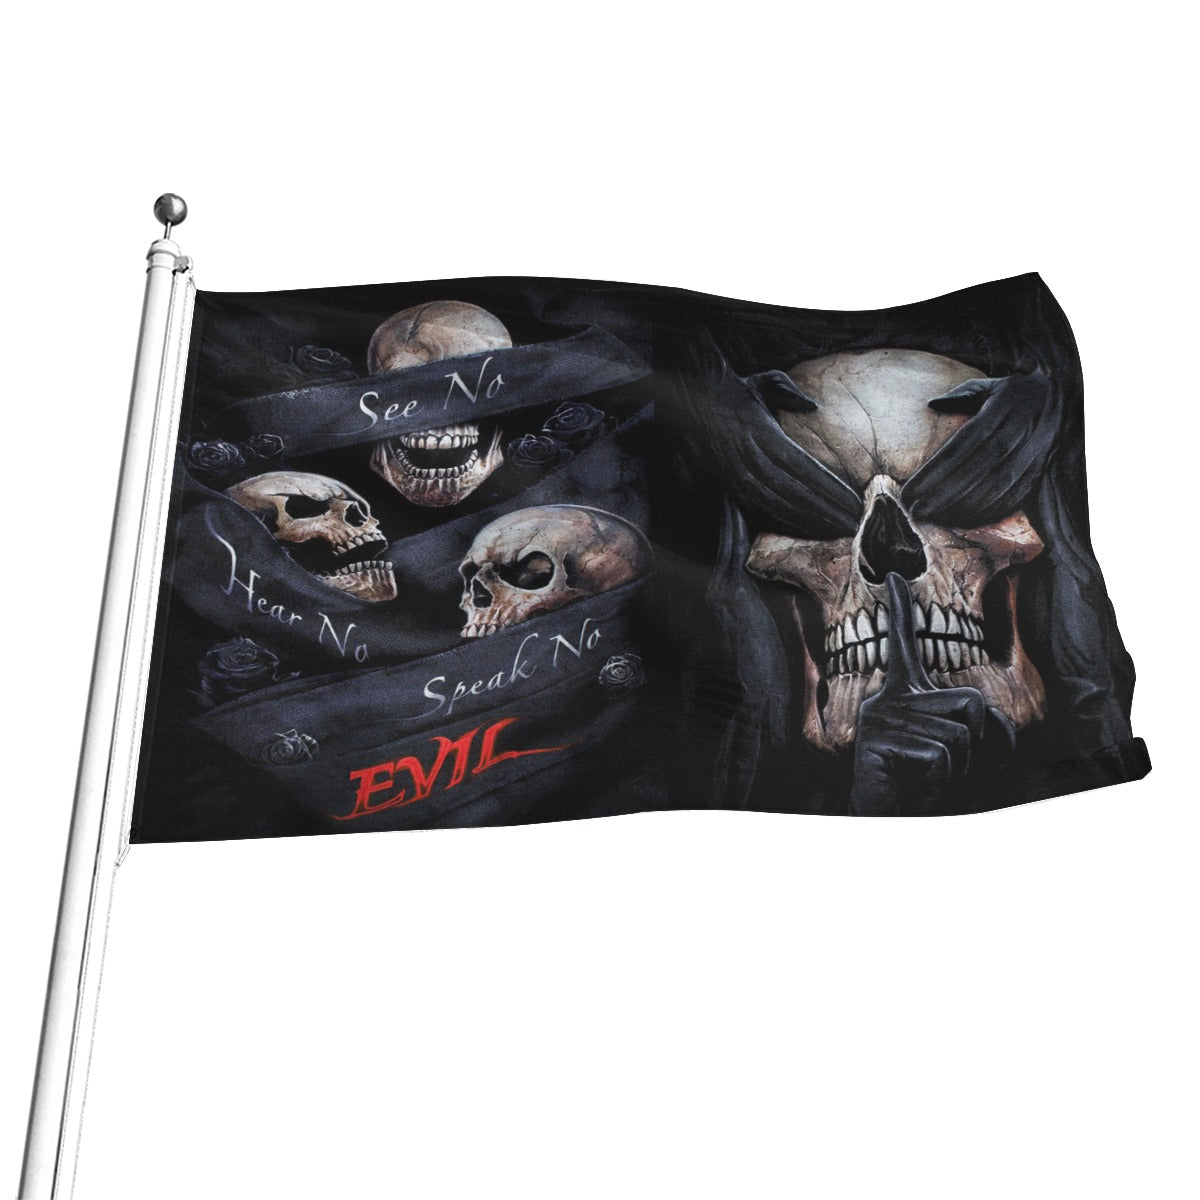 No see no hear no speak evils skull All-Over Print Flag